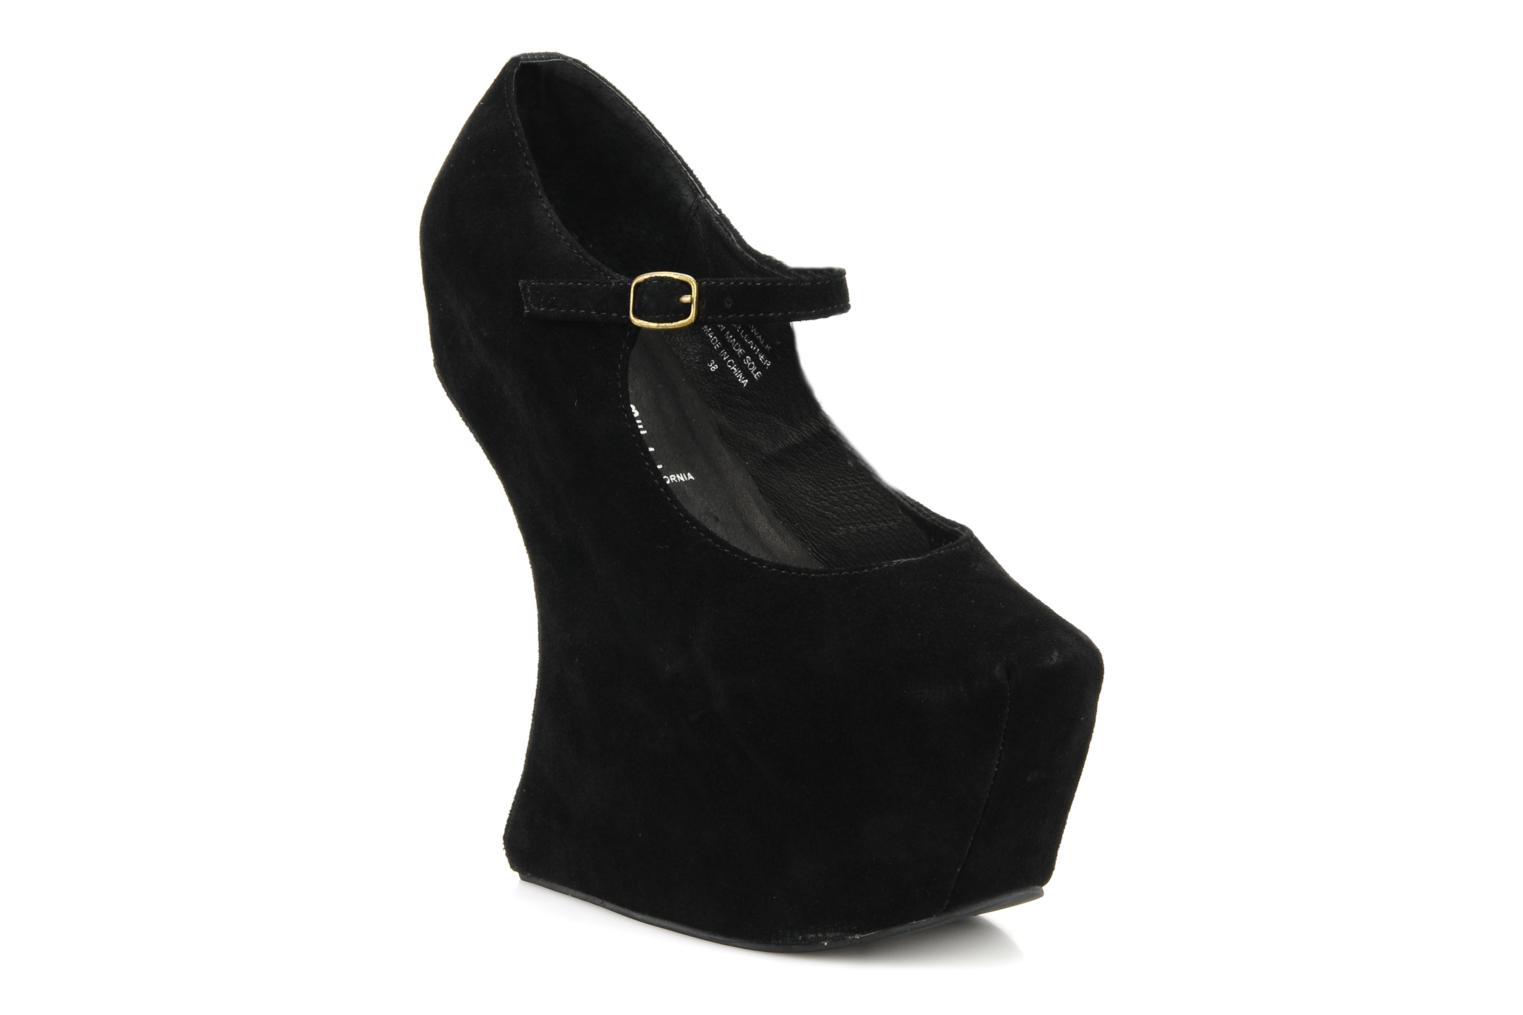 Jeffrey Campbell Nightwalk High heels in Black at Sarenza.co.uk (79470)